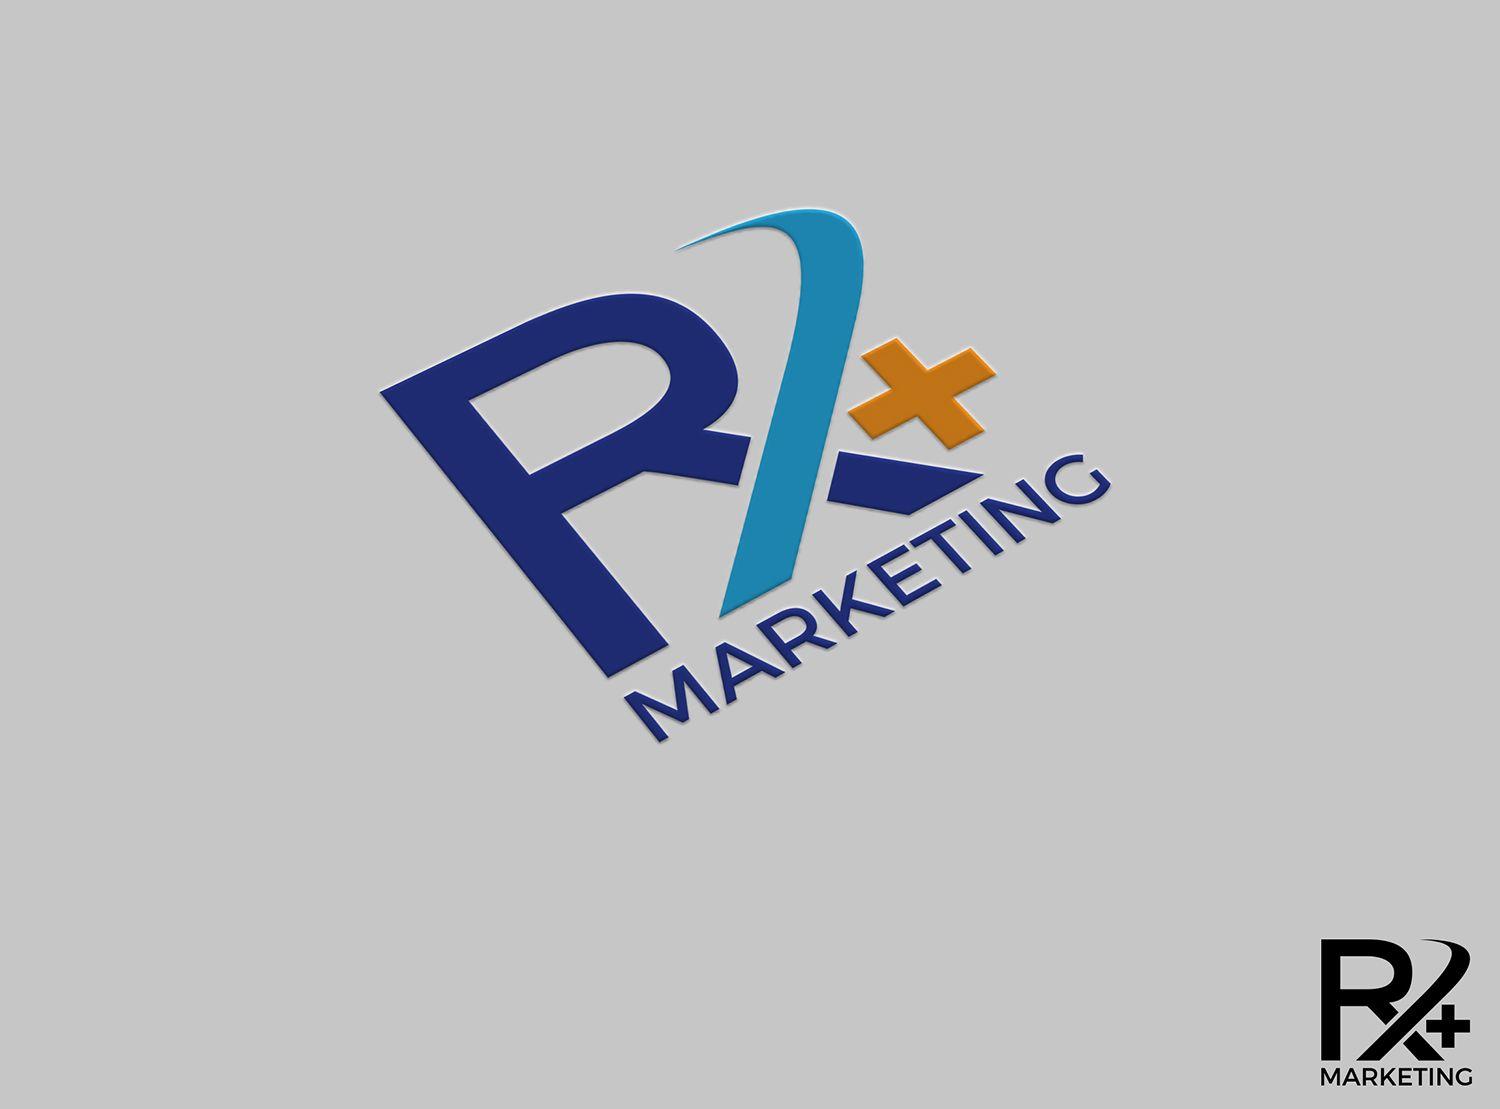 RX Logo - Upmarket, Bold, Marketing Logo Design for Rx Plus Marketing by ...